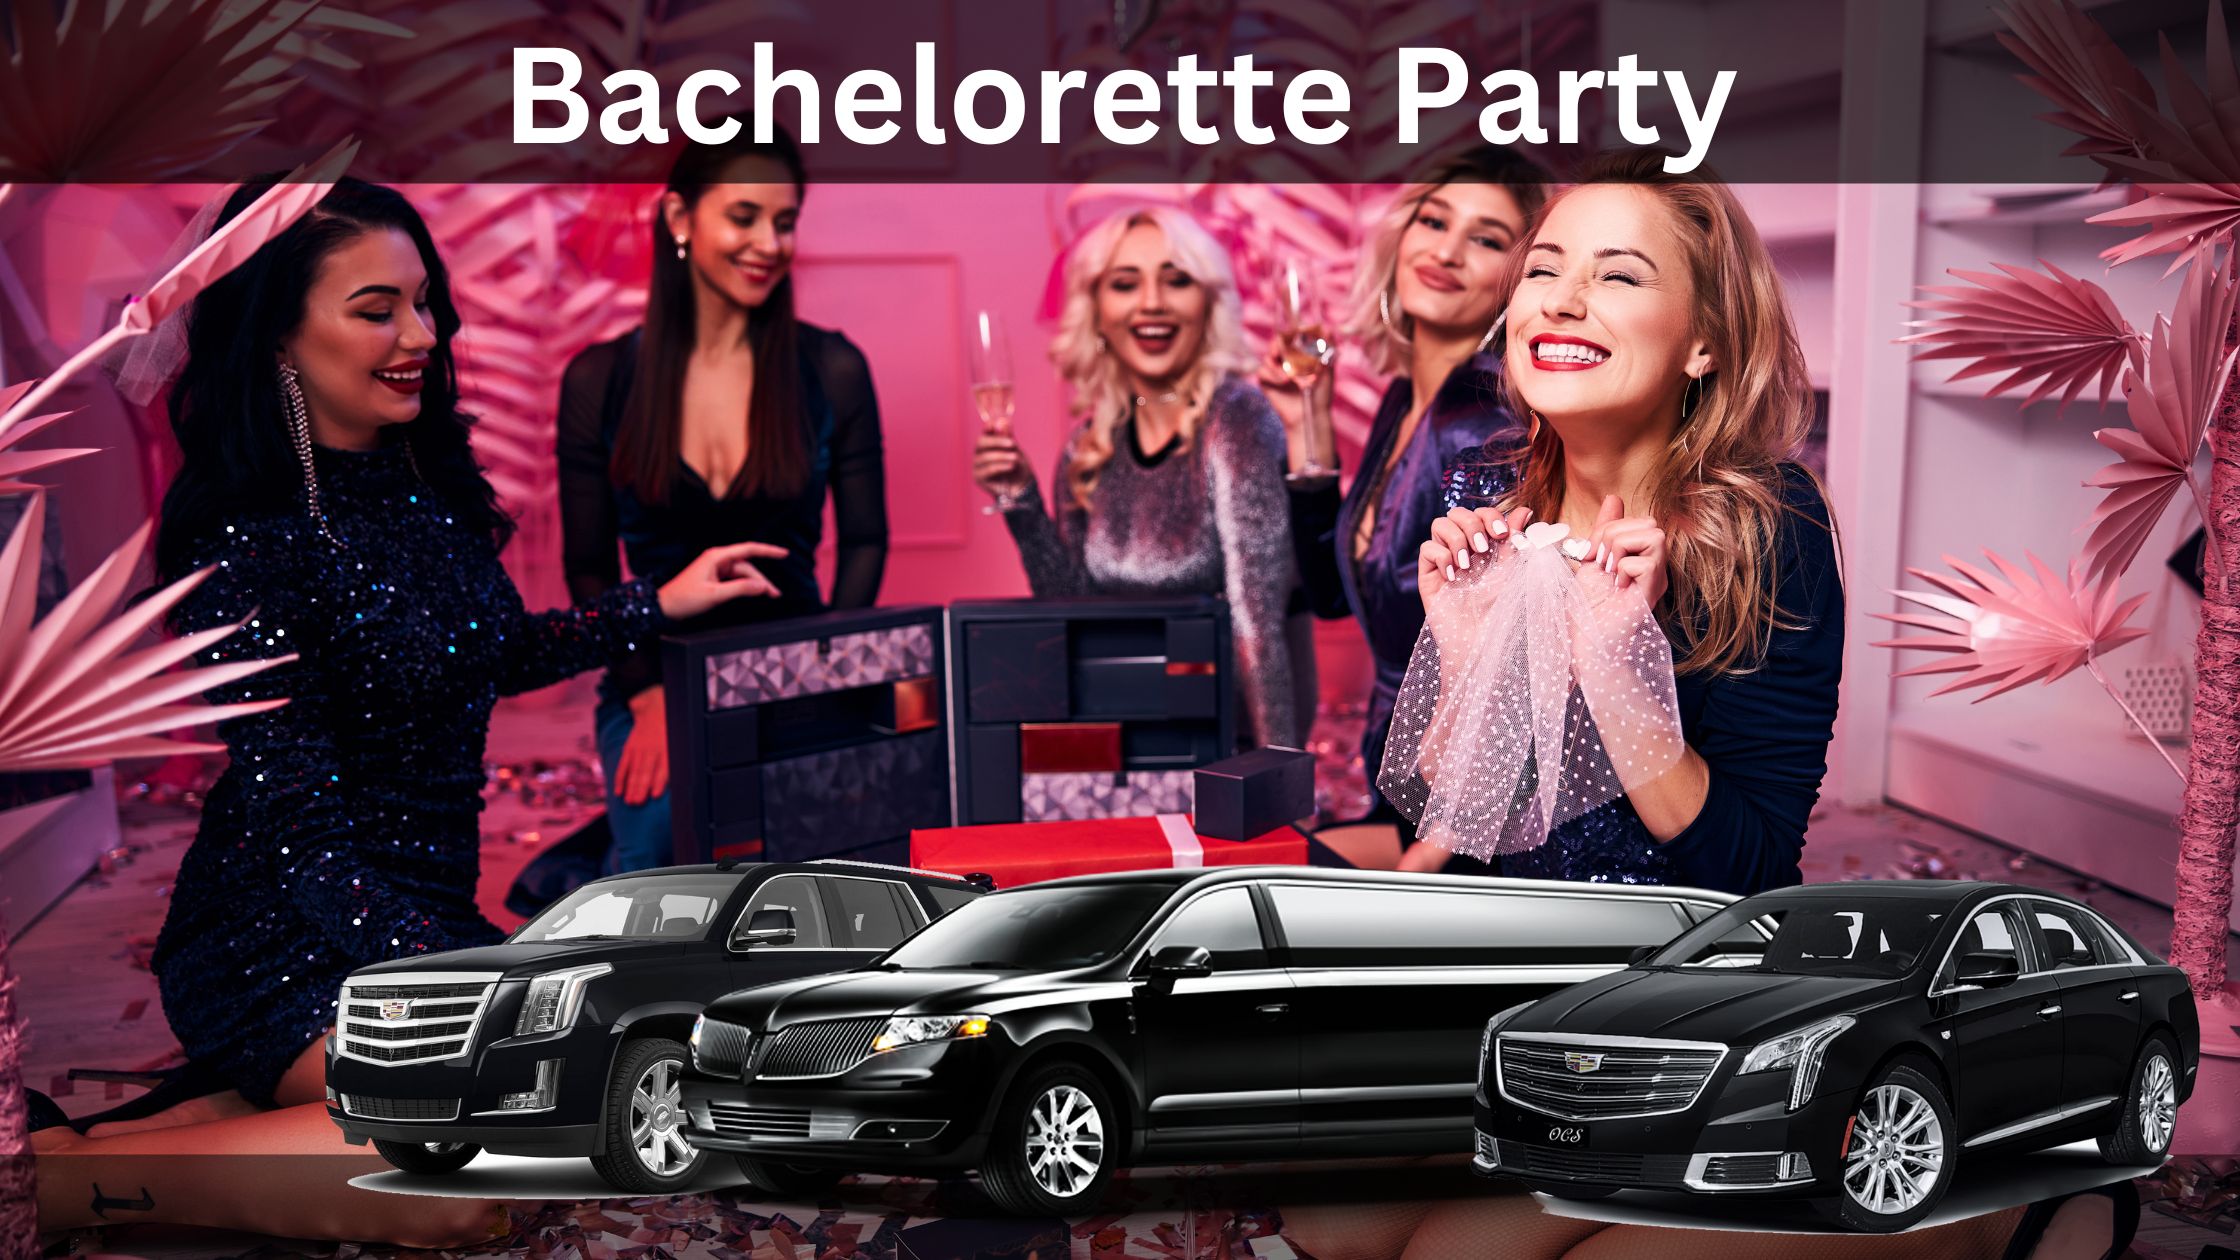 Bachelorette party limo